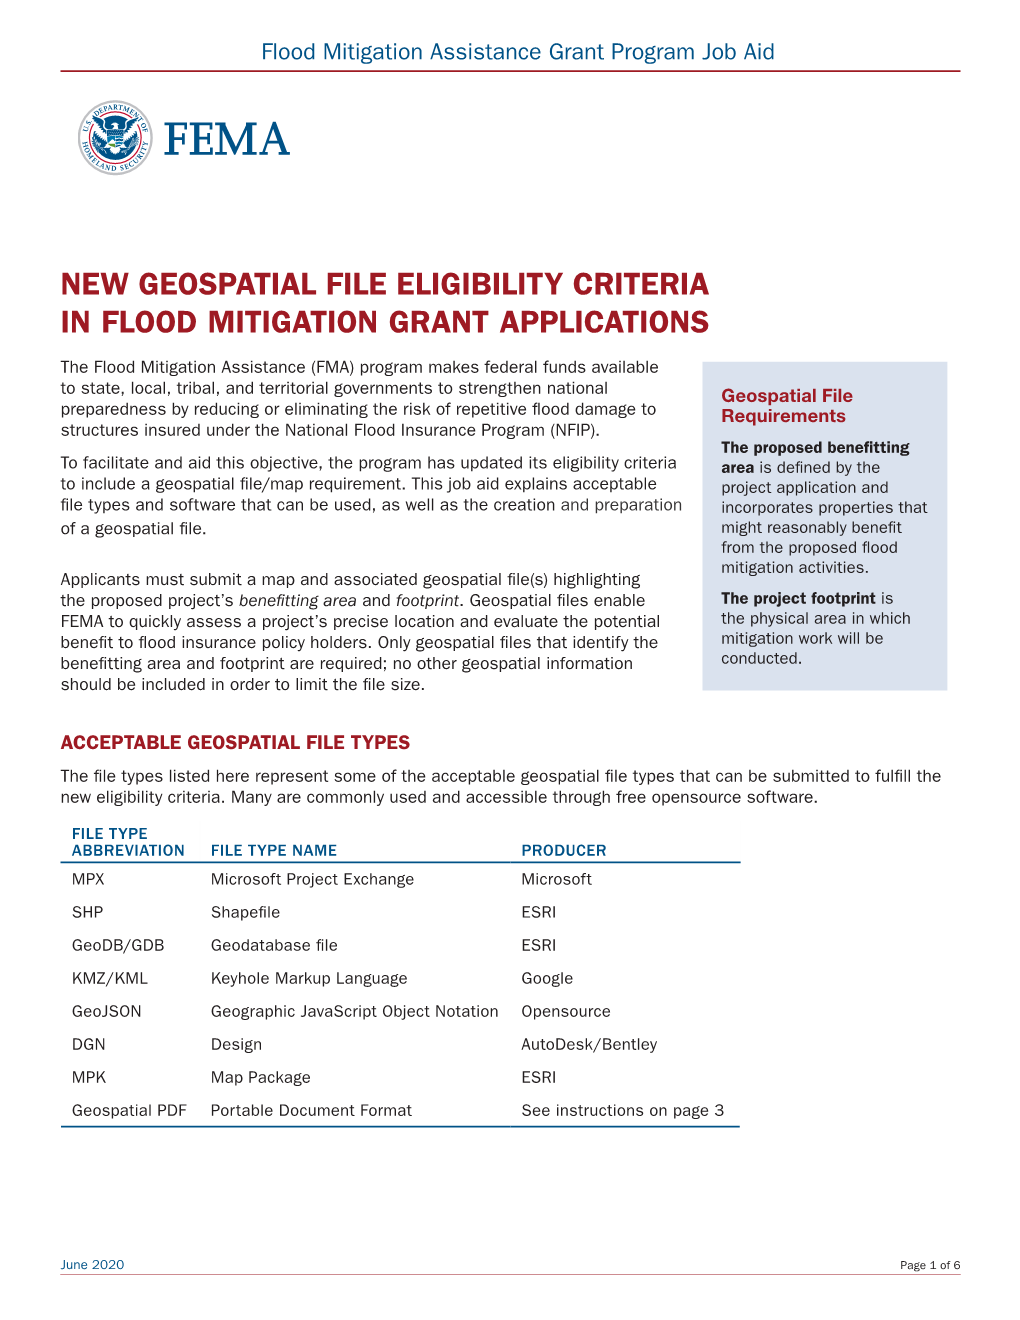 Flood Mitigation Grant Applications Geospatial File Eligibility Criteria Job